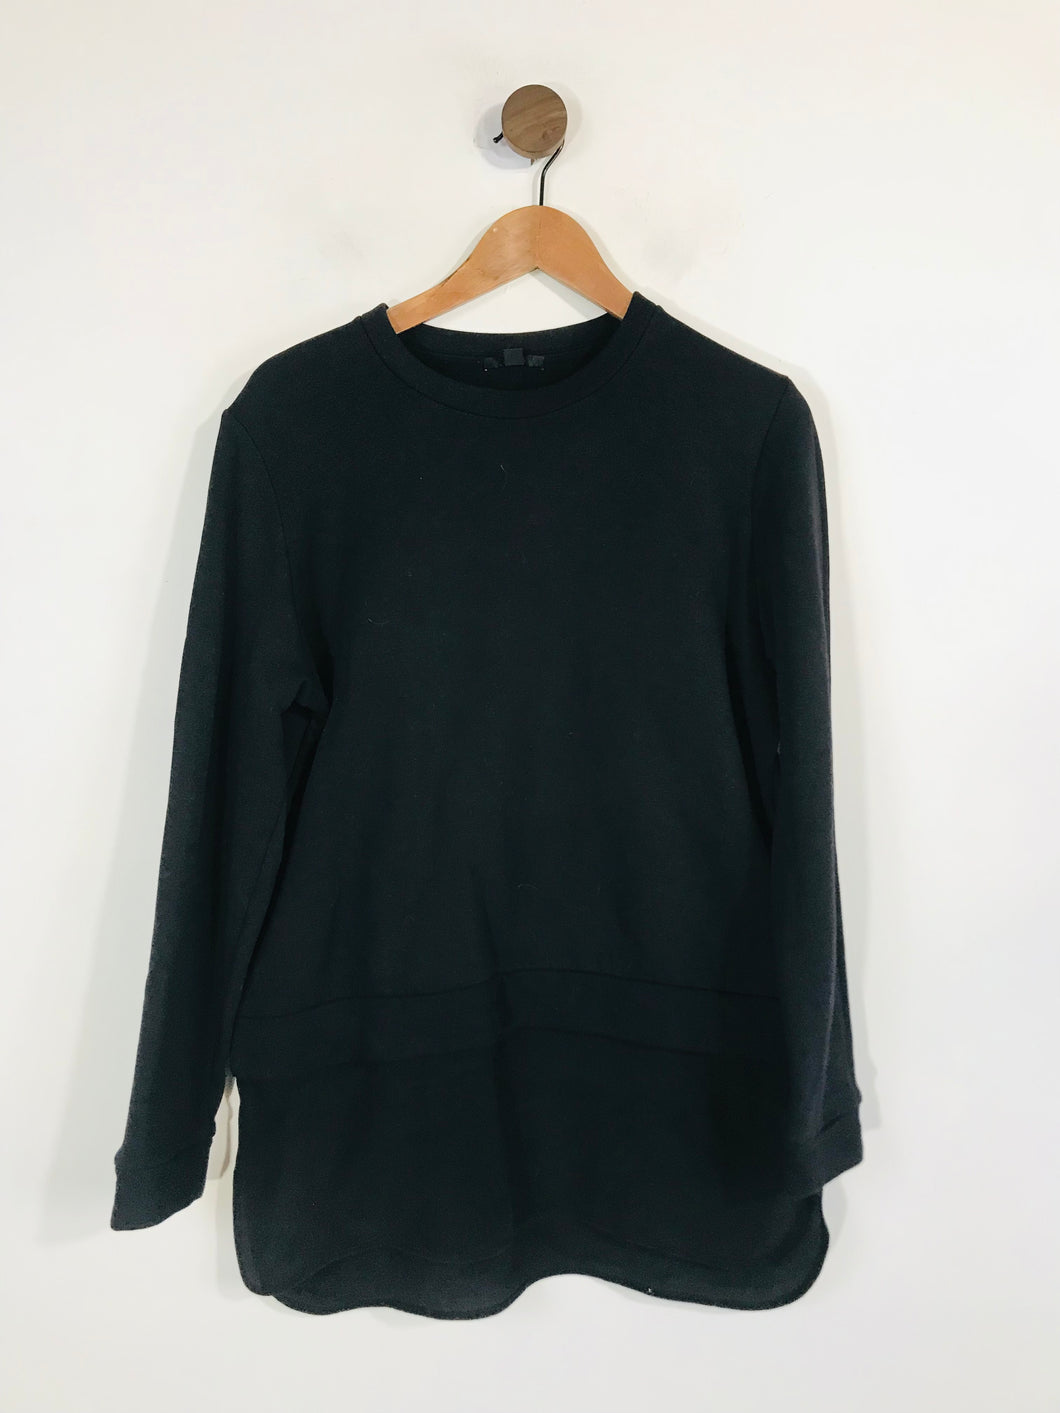 Cos Women's Long Sleeve Tunic Blouse | M UK10-12 | Black